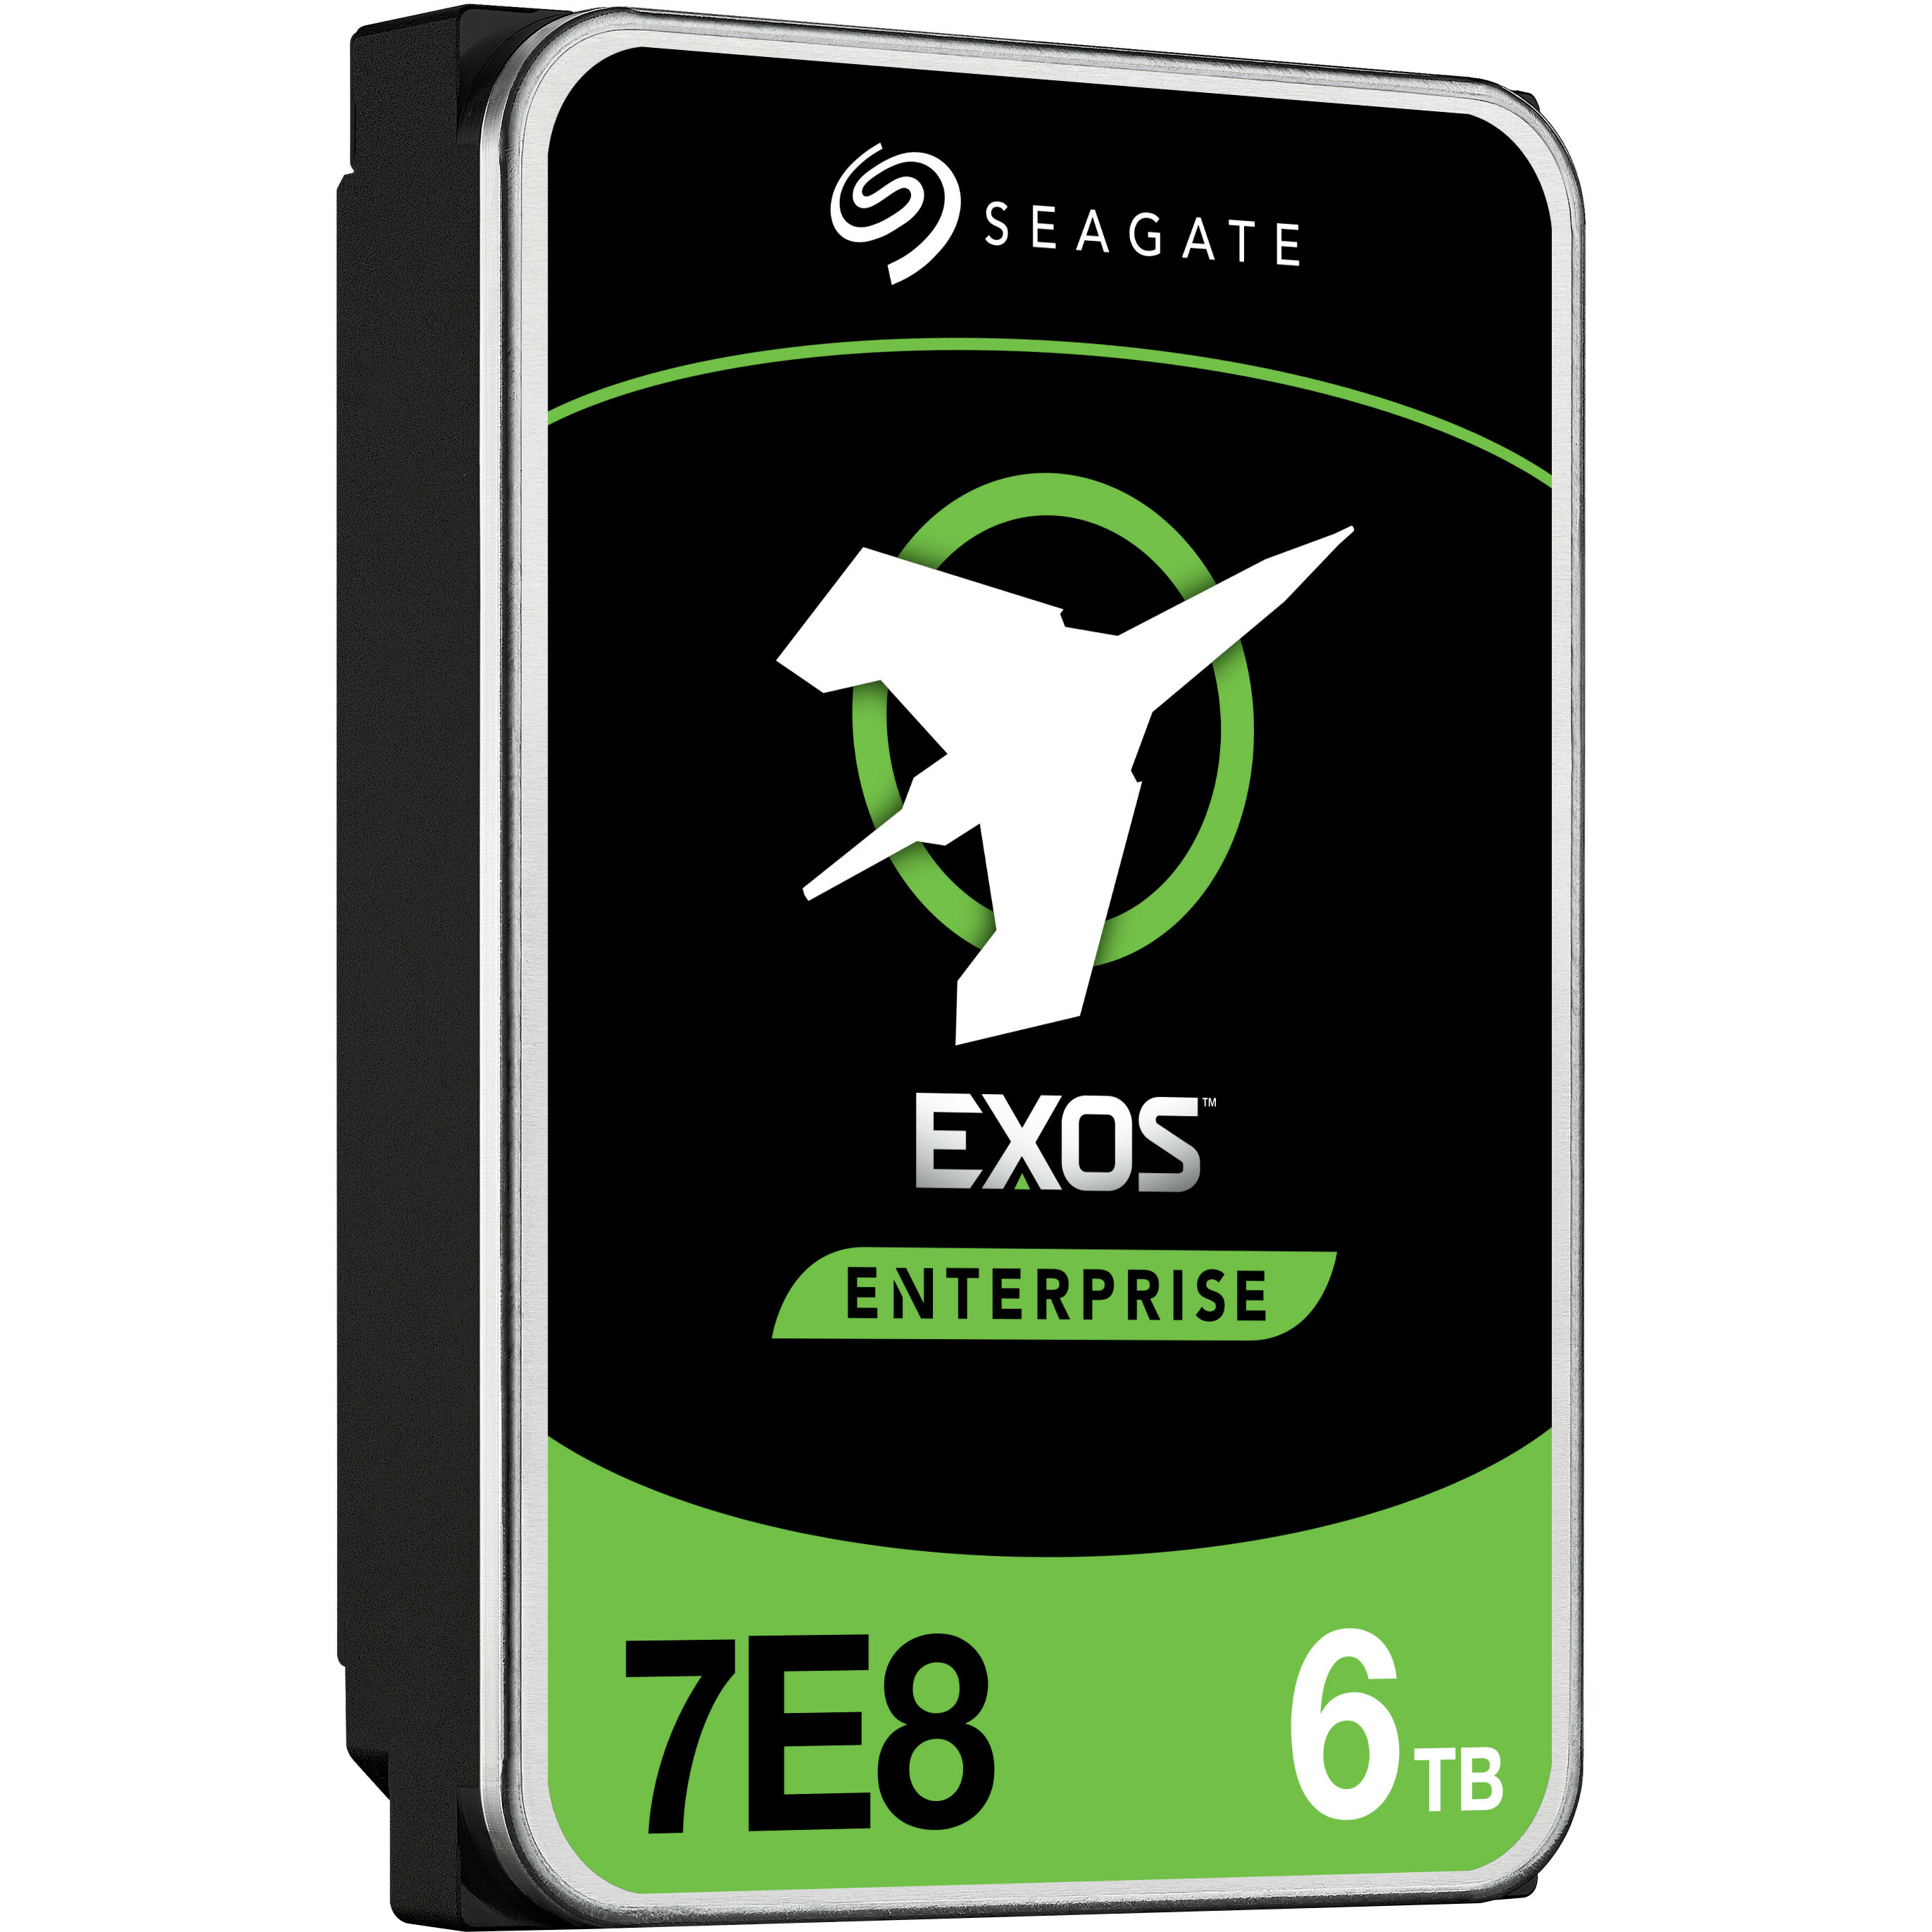 Seagate Exos 7E8 ST6000NM002A - Hard drive - 6 TB - internal - 3.5" - SATA 6Gb/s - 7200 rpm - buffer: 256 MB - image 3 of 4